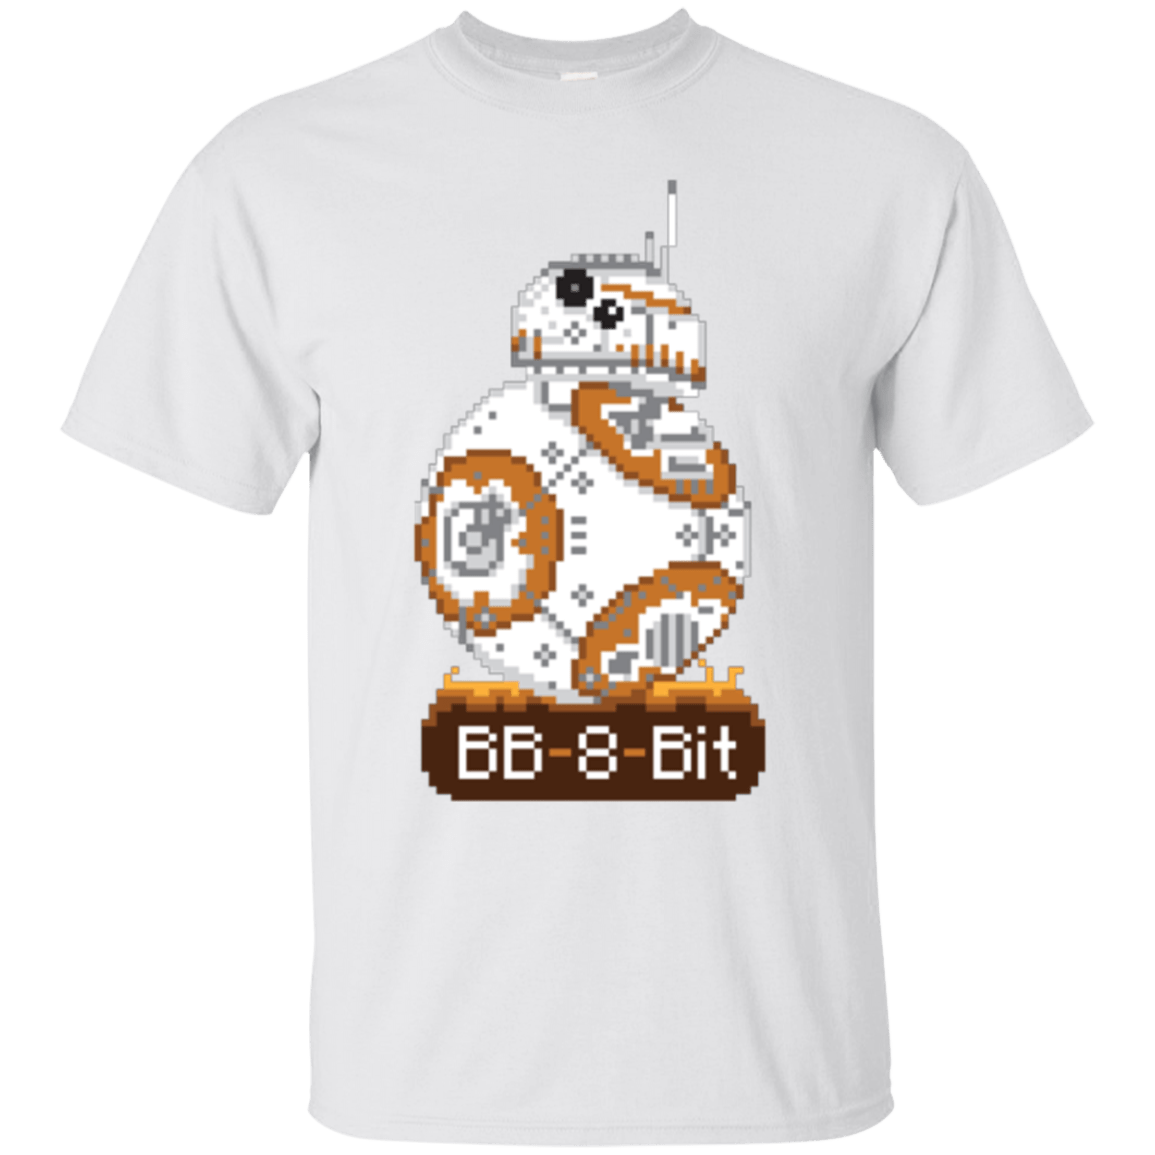 T-Shirts White / Small BB8Bit T-Shirt